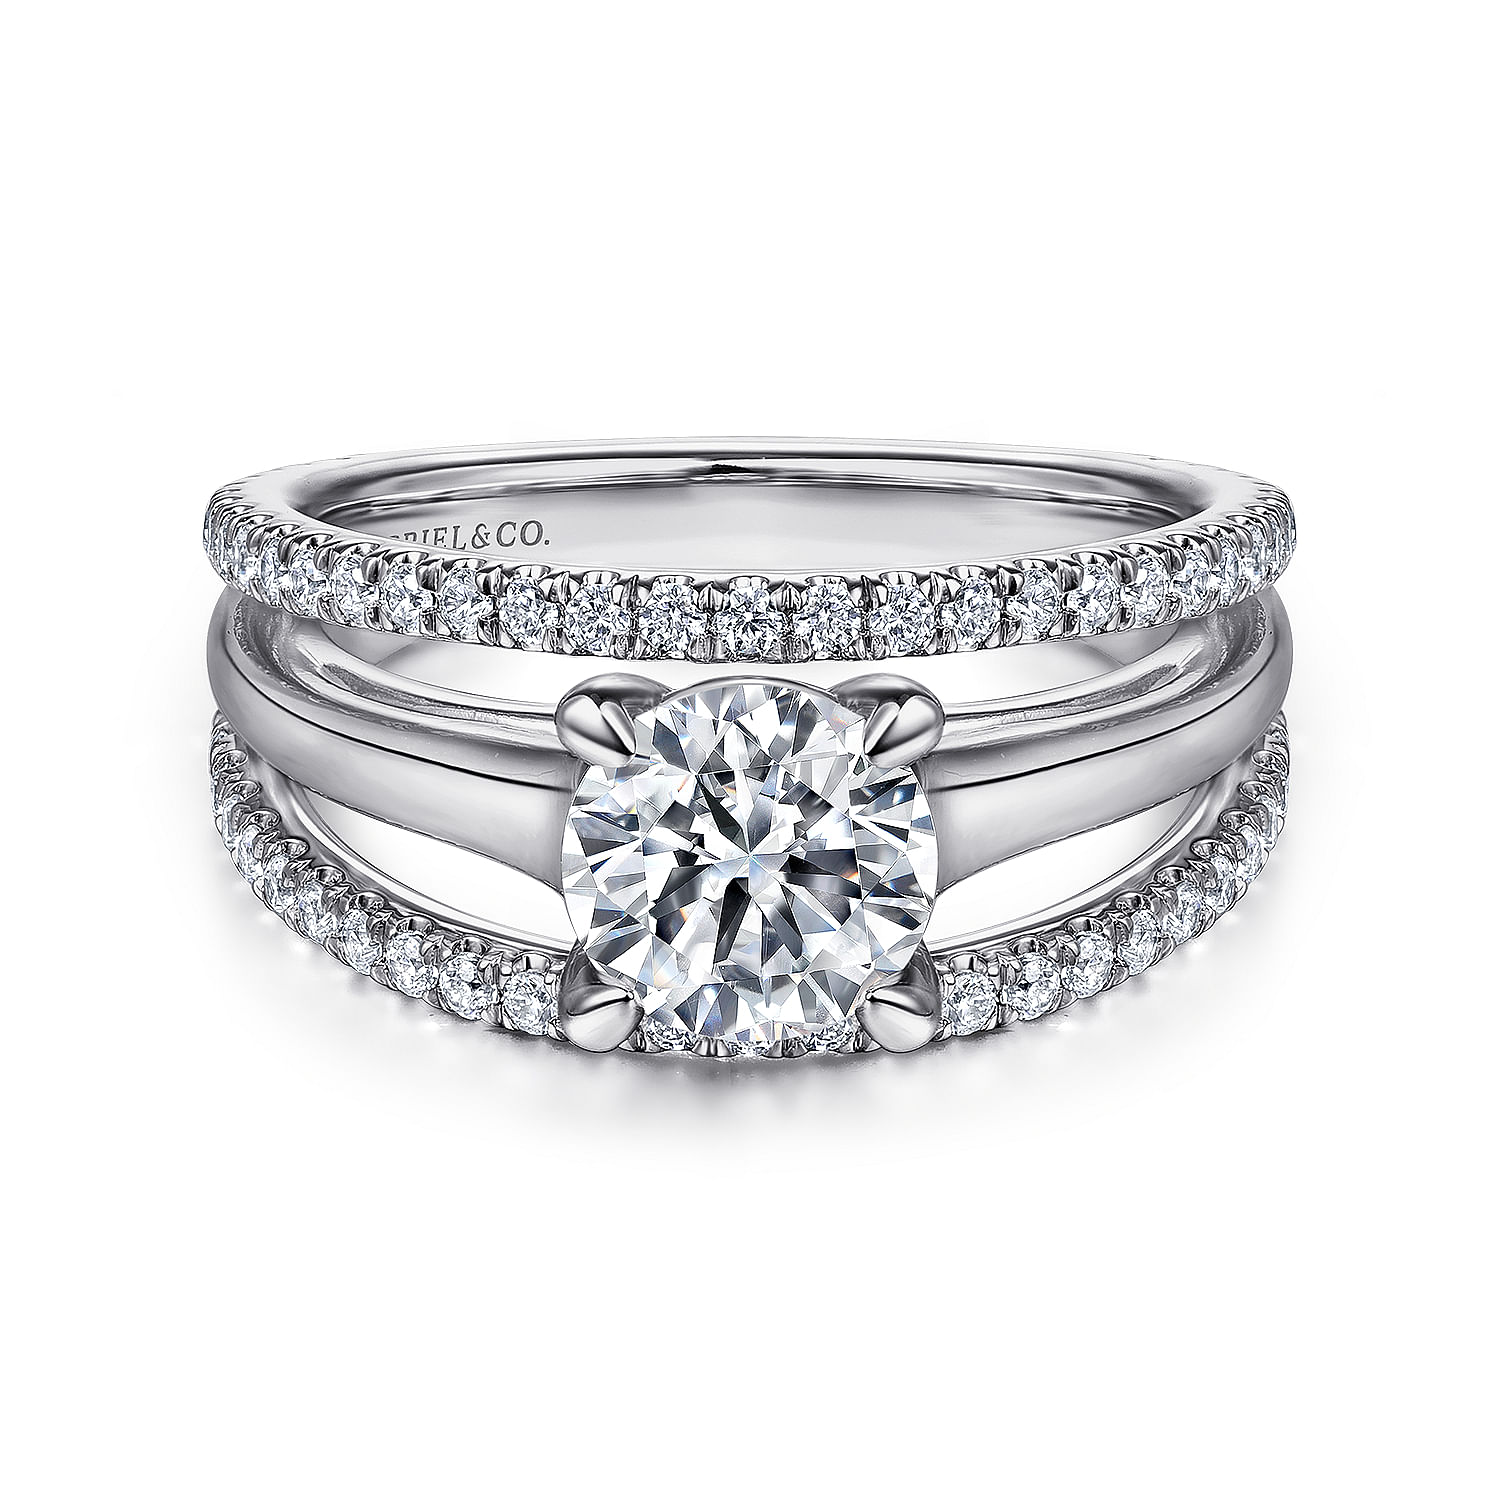 14K White Gold Wide Band Round Diamond Engagement Ring, ER16304R6W44JJ